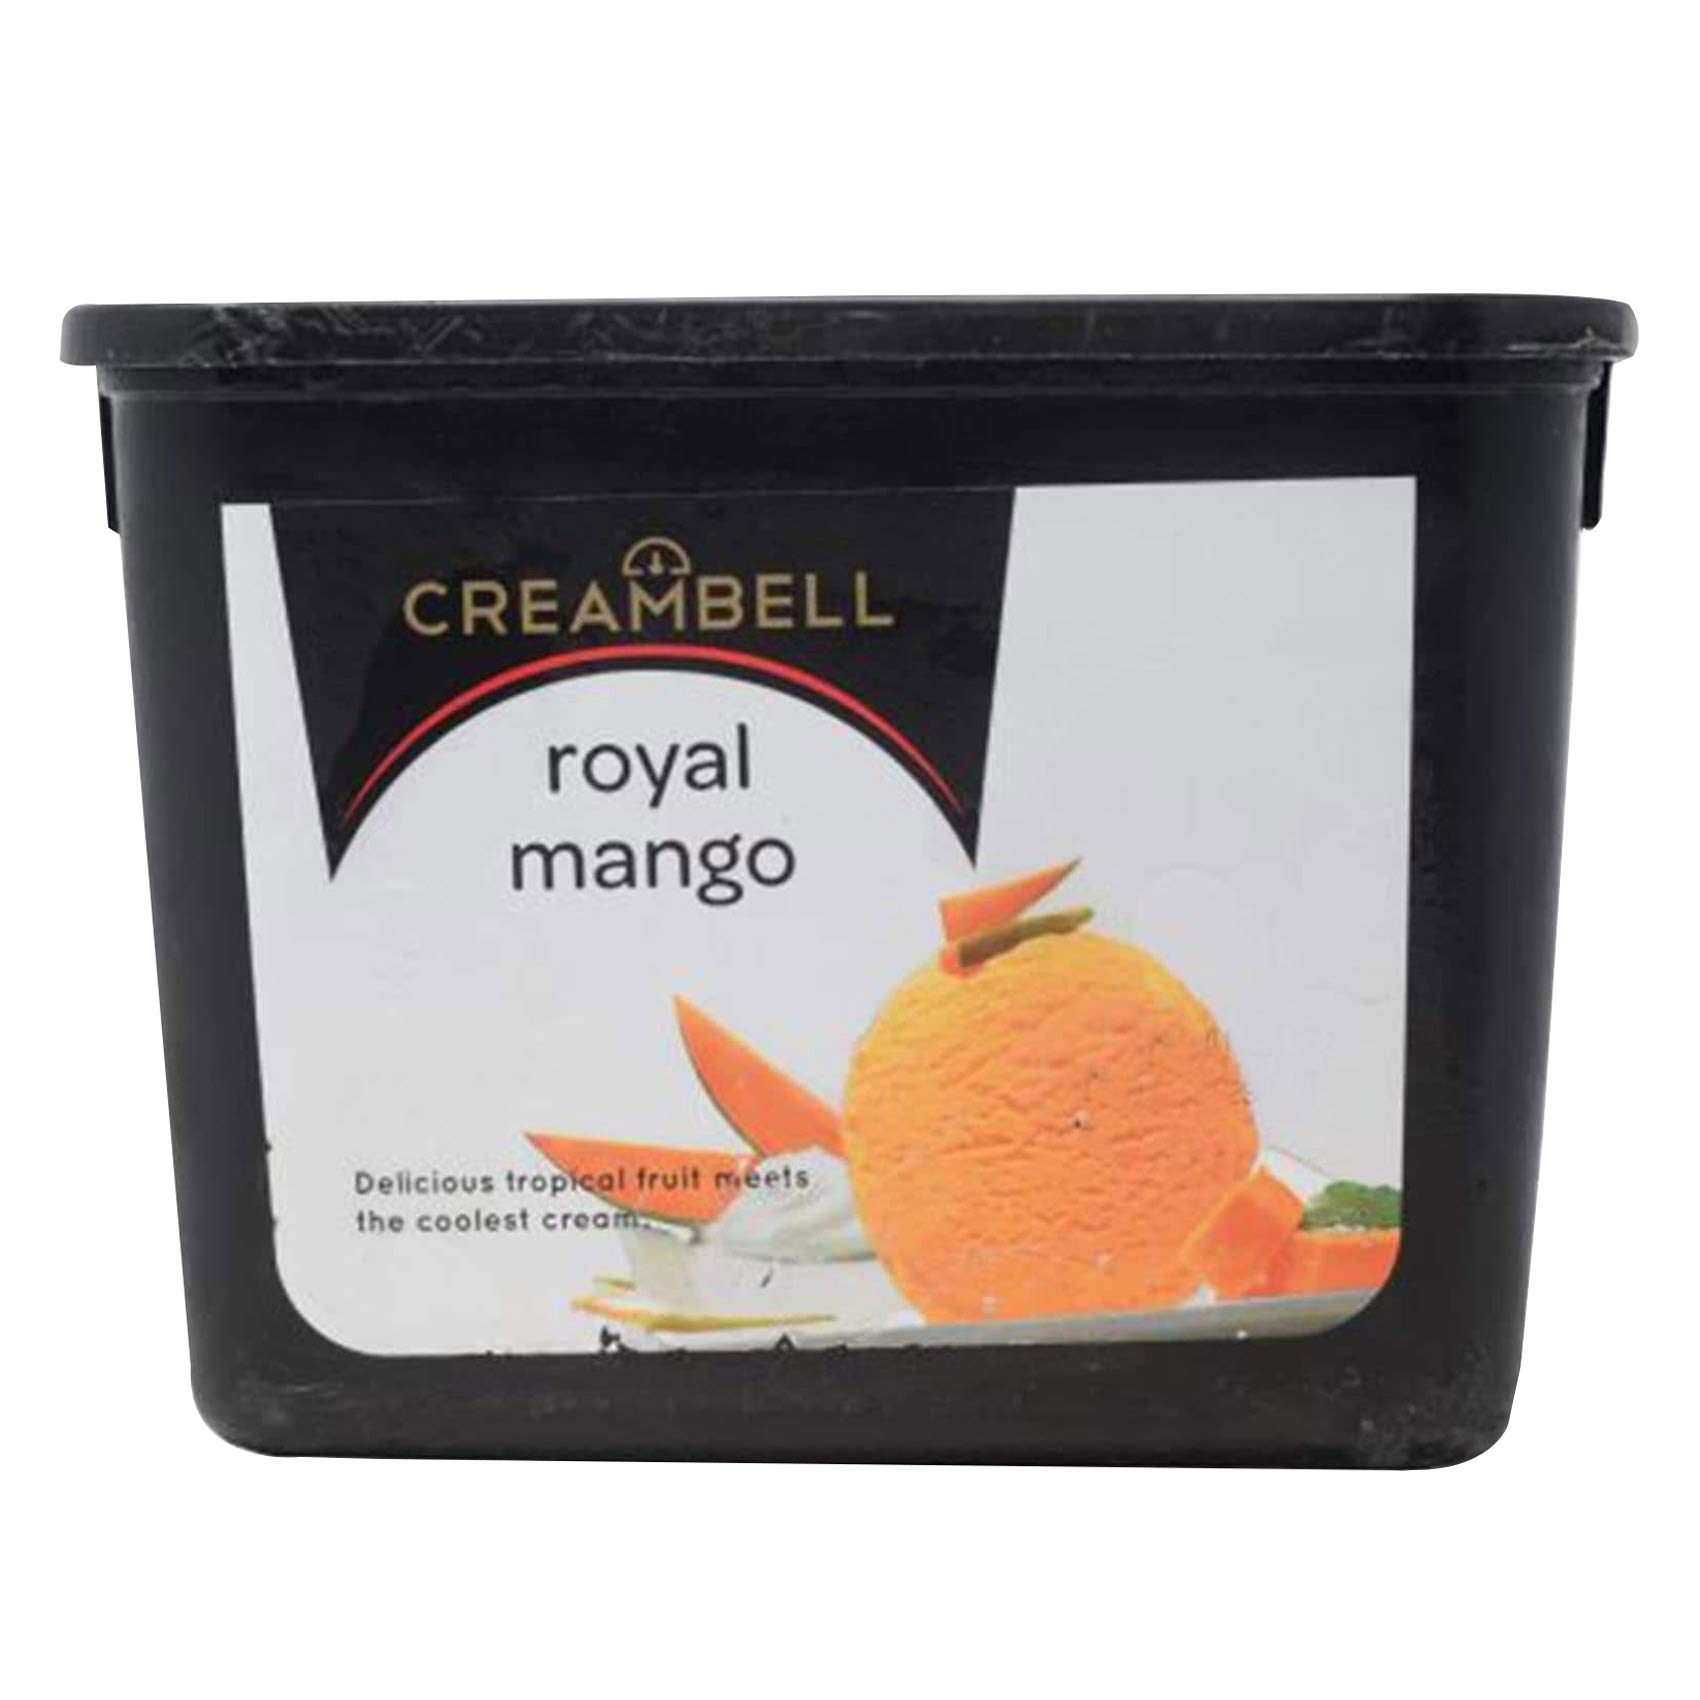 Creambell Royal Mango Ice Cream 4L